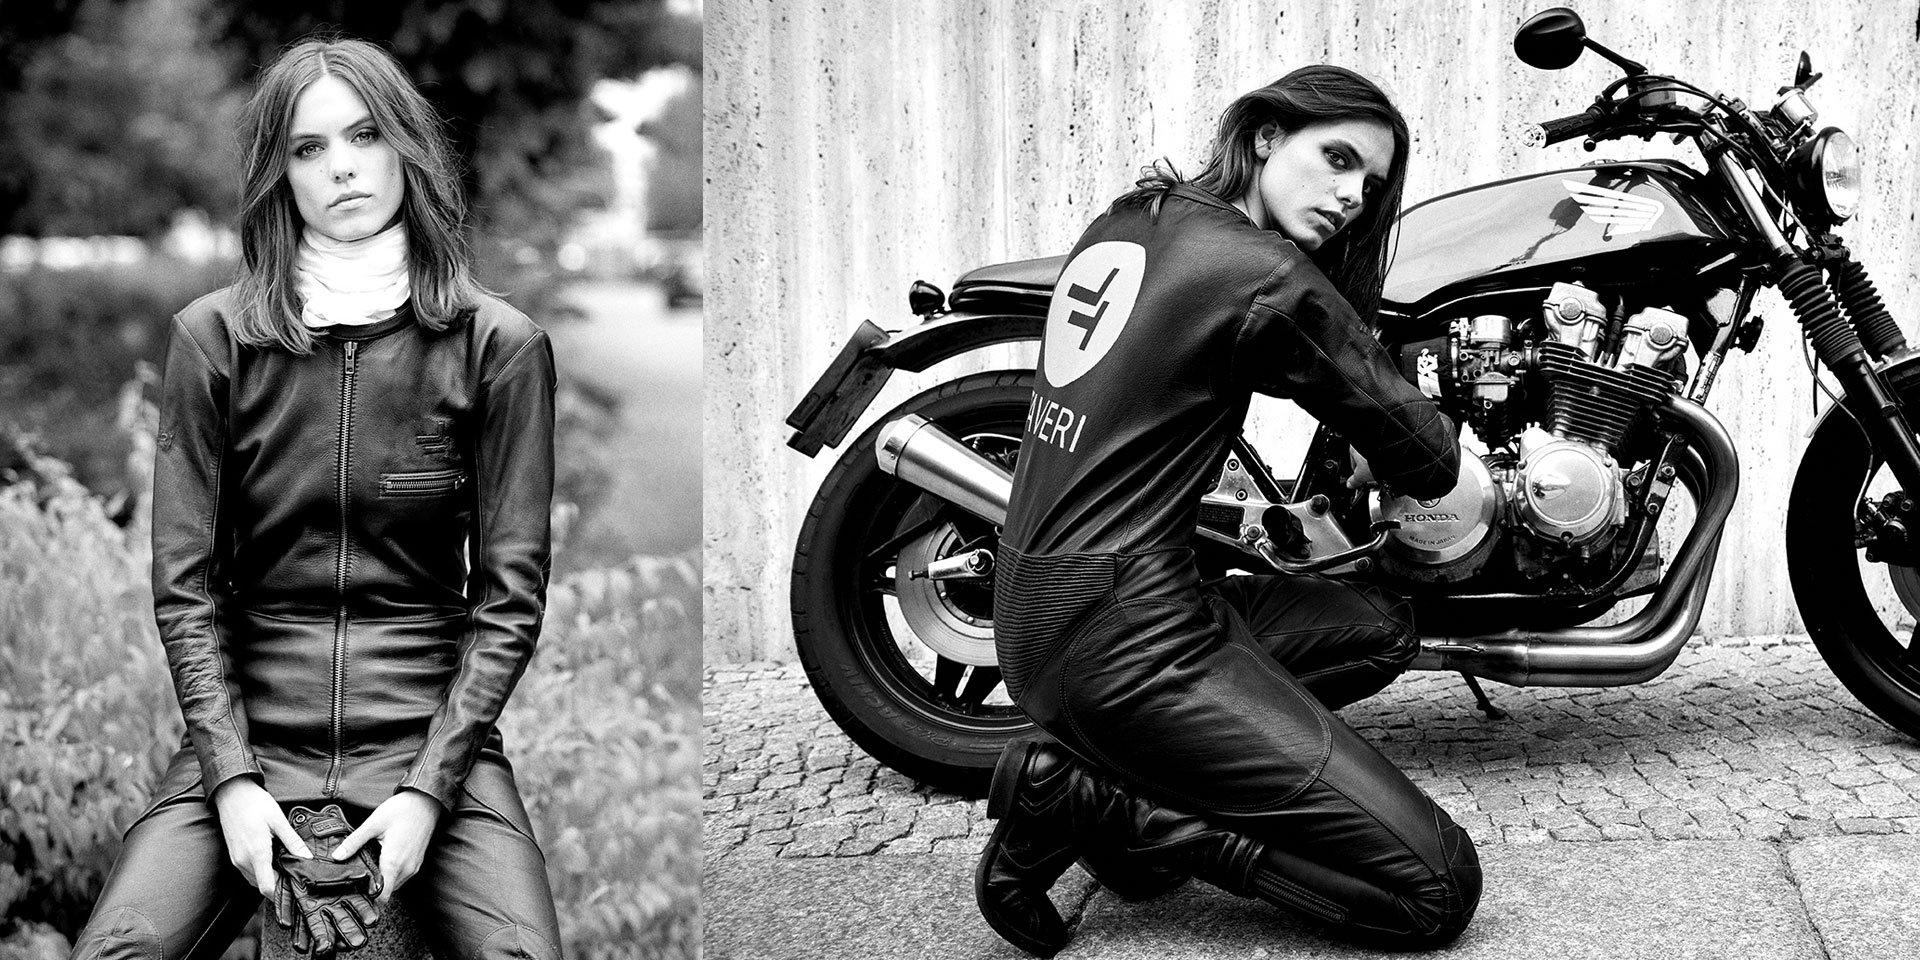 03 milani design consulting agency Taveri moto motorbike luigi taveri fashion leather startup